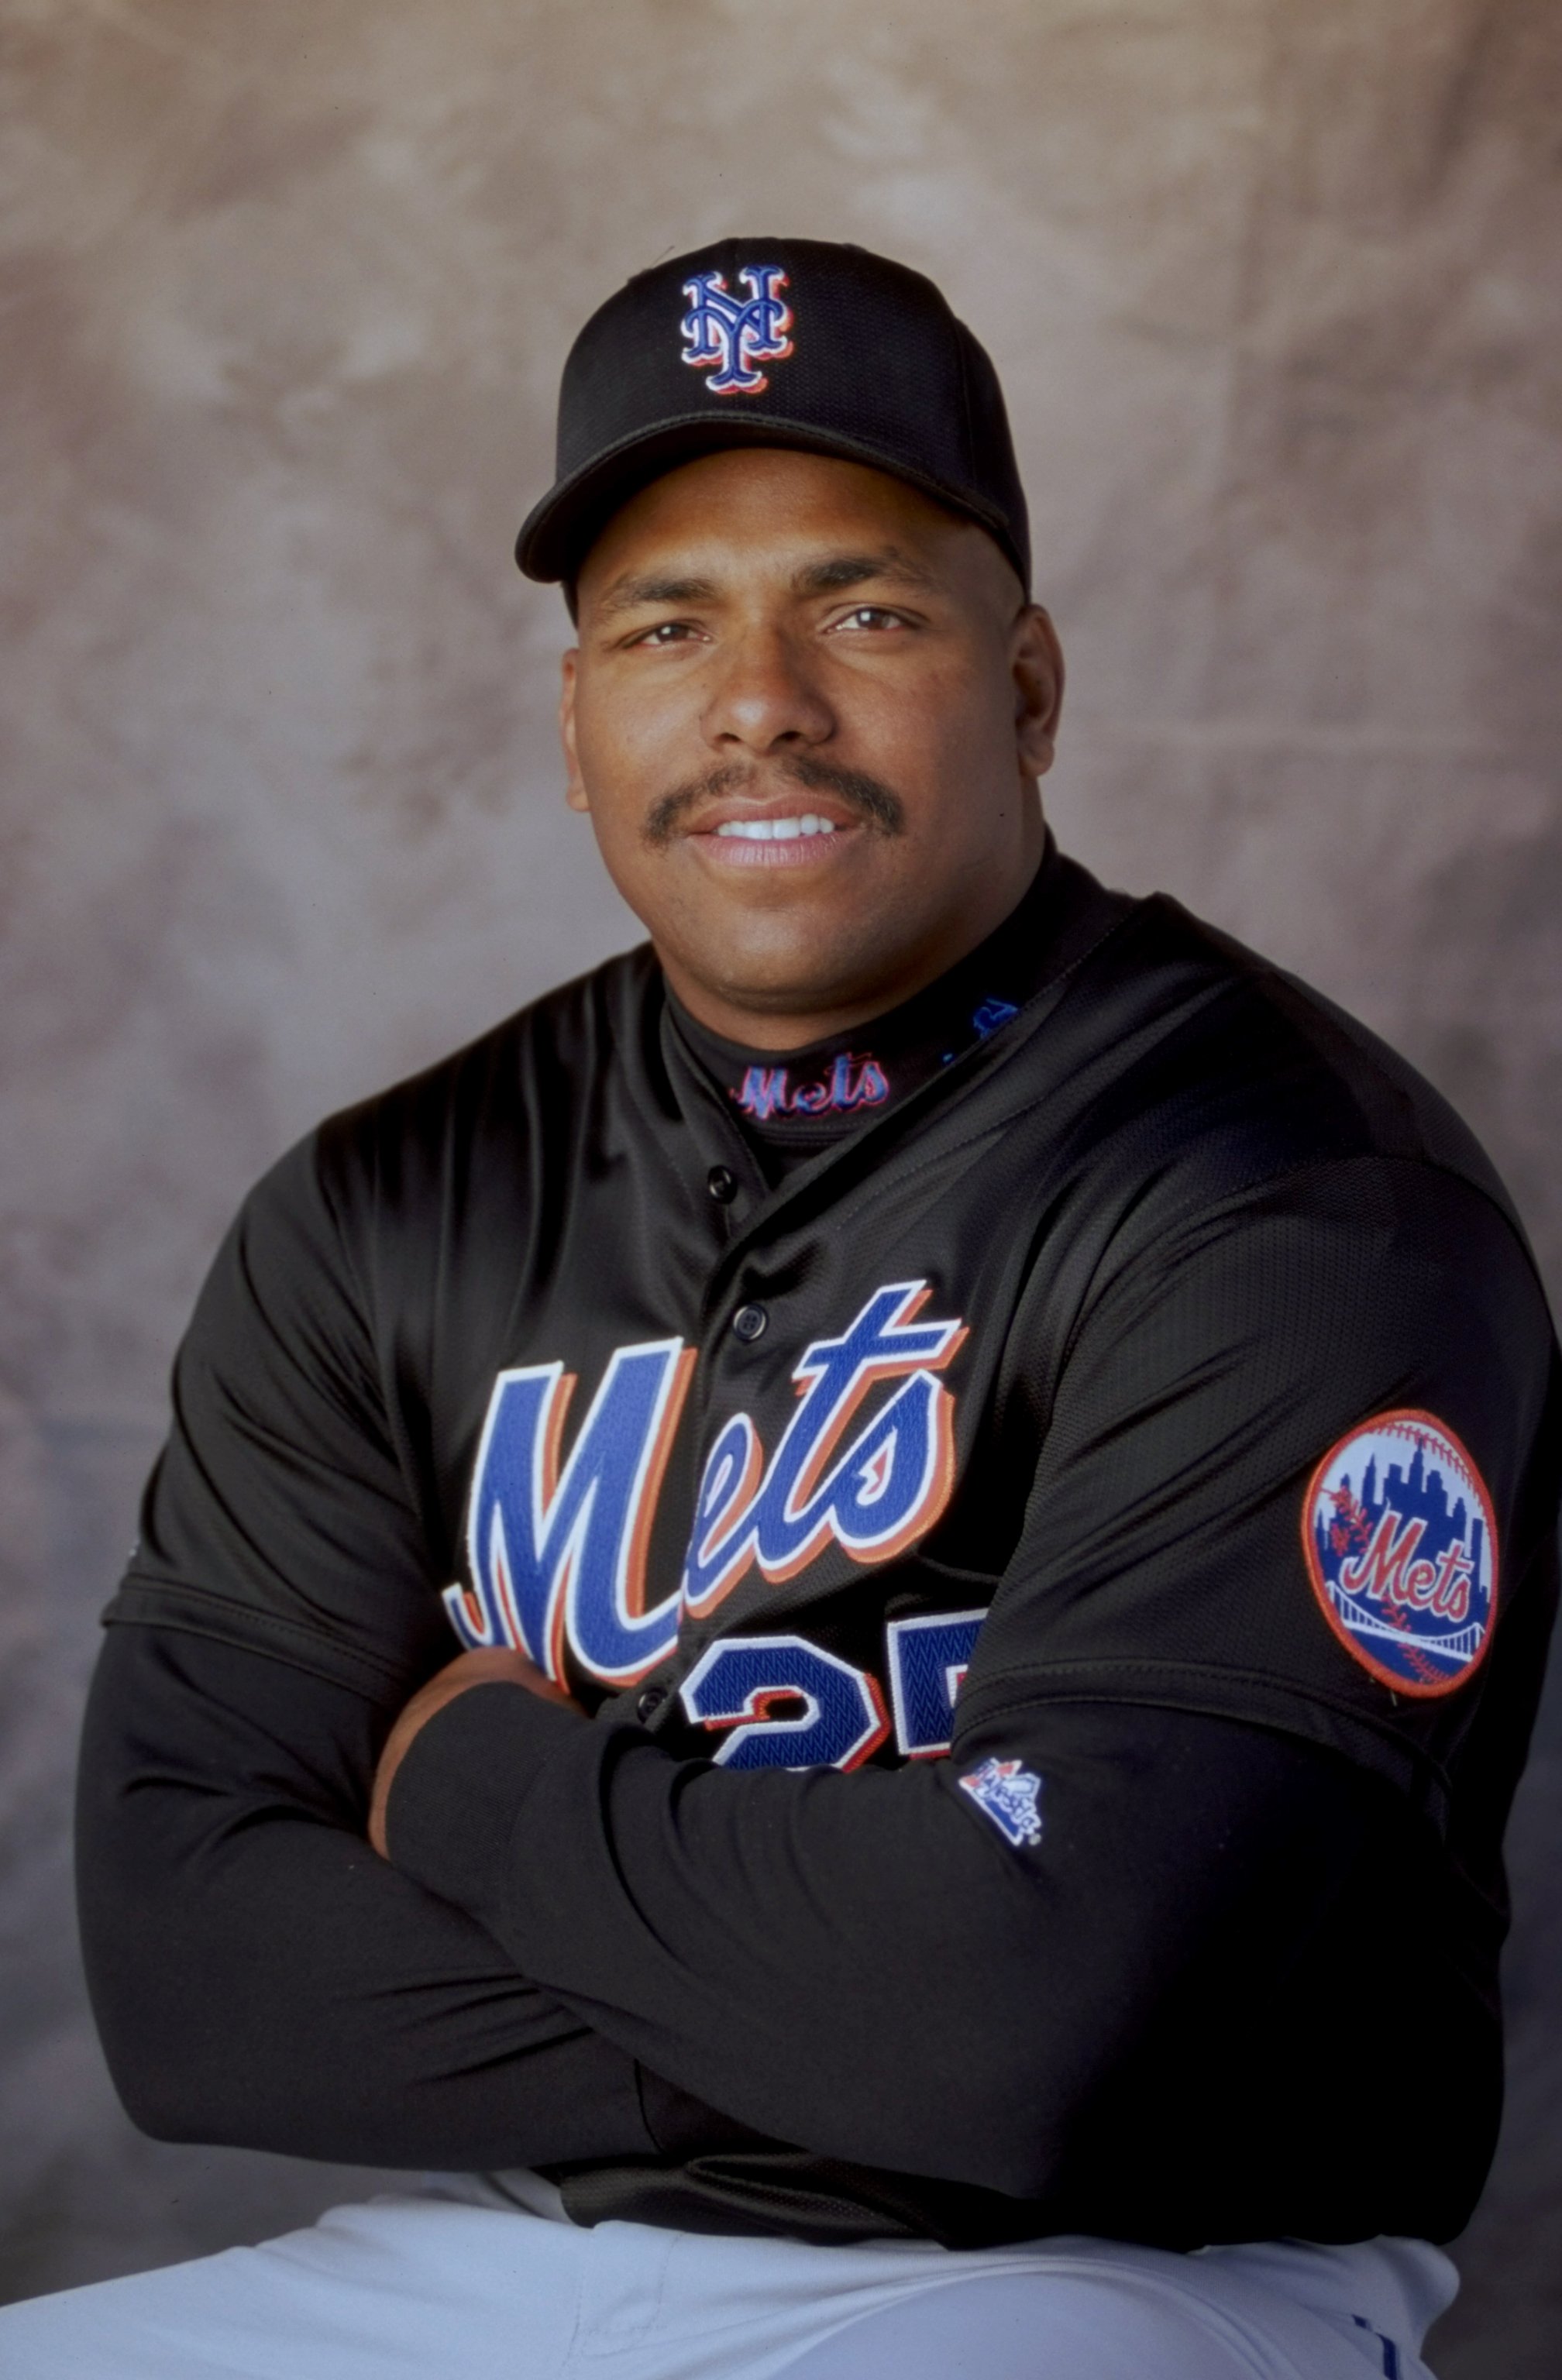 1992 Bobby Bonilla Game-Worn Mets Jersey